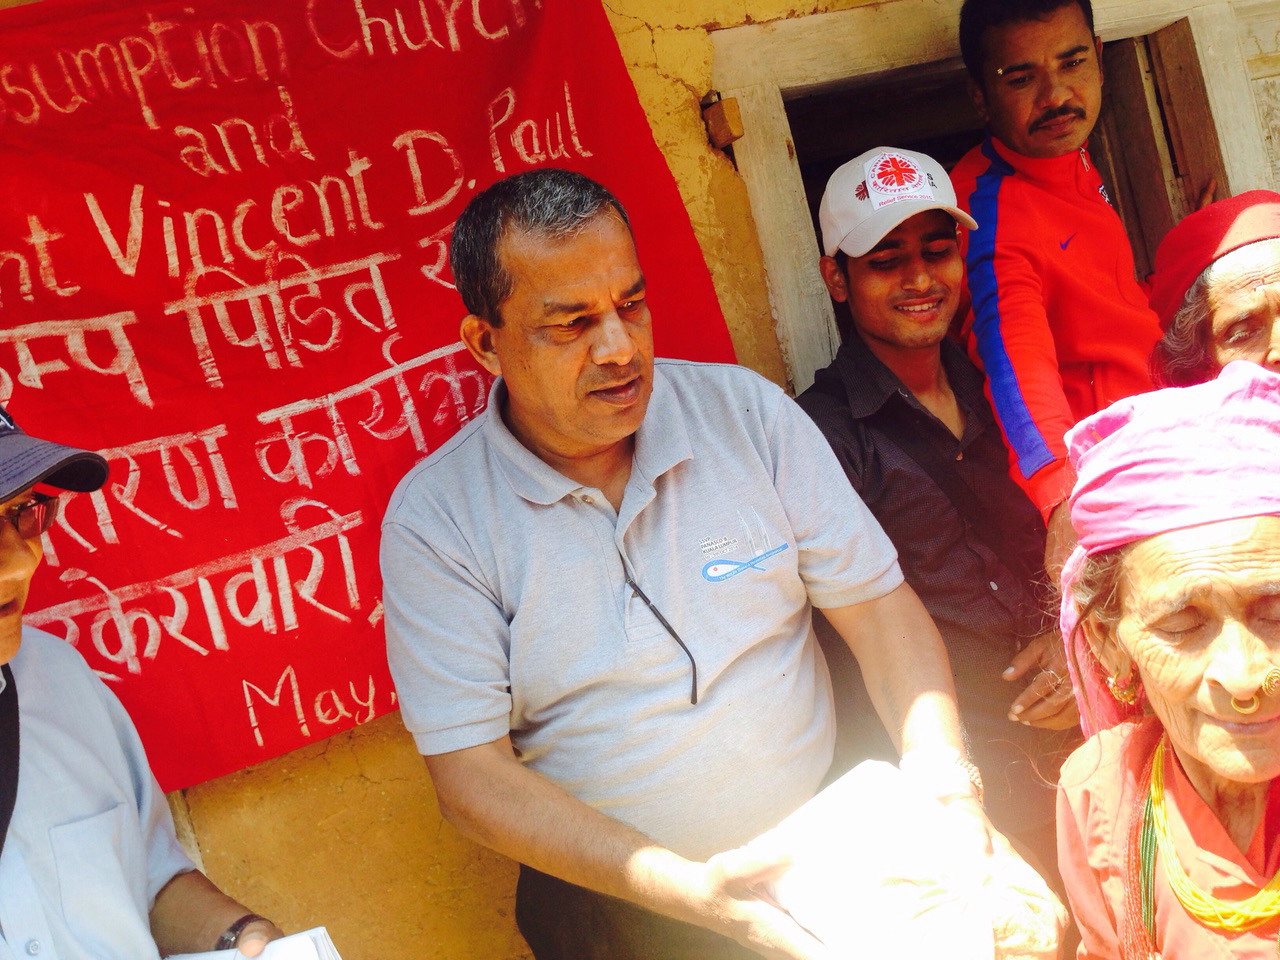 SSVP updates on Nepal relief efforts